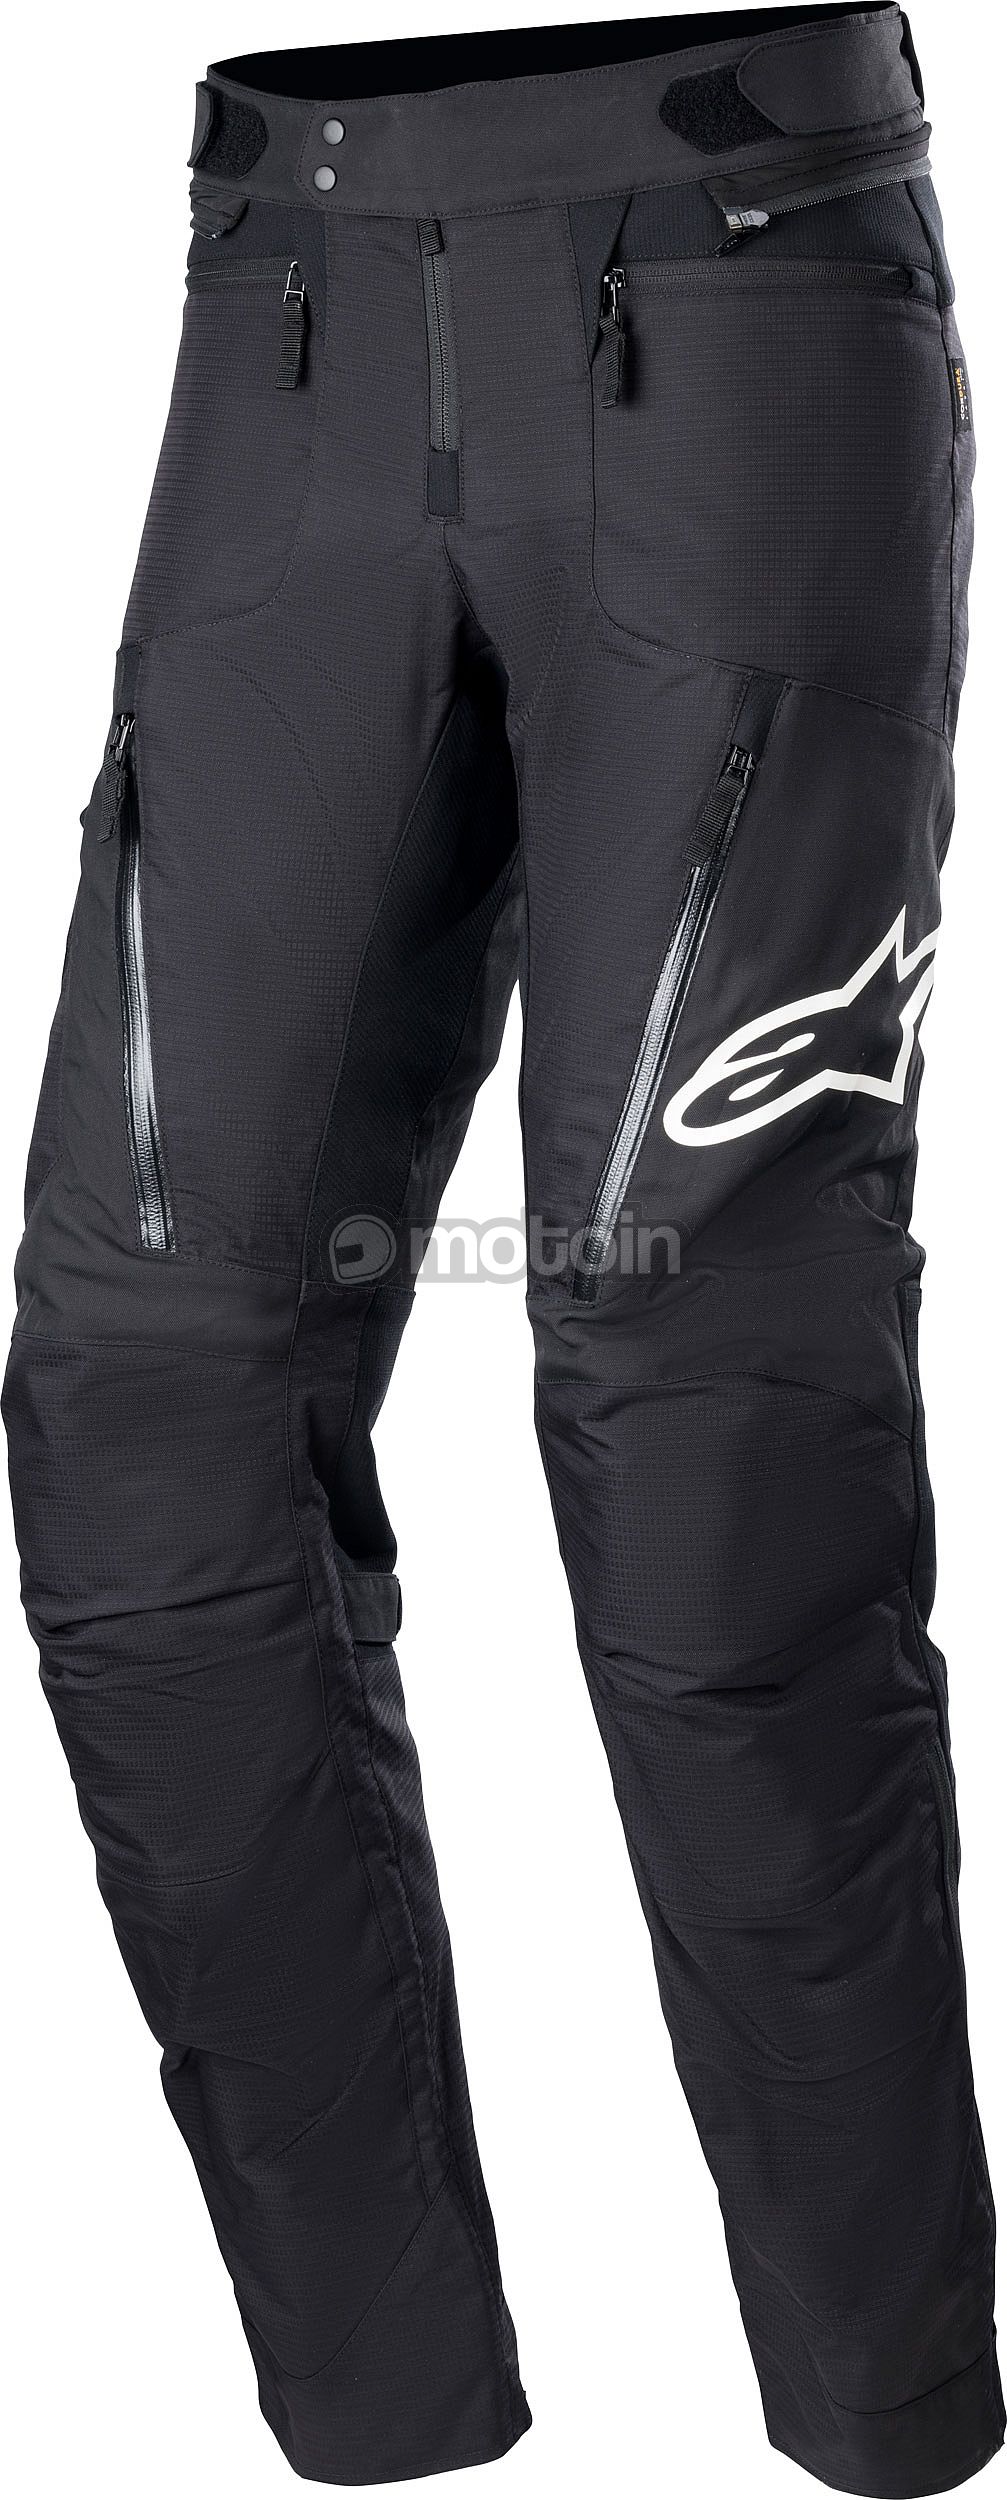 Alpinestars RX-3, textile pants waterproof